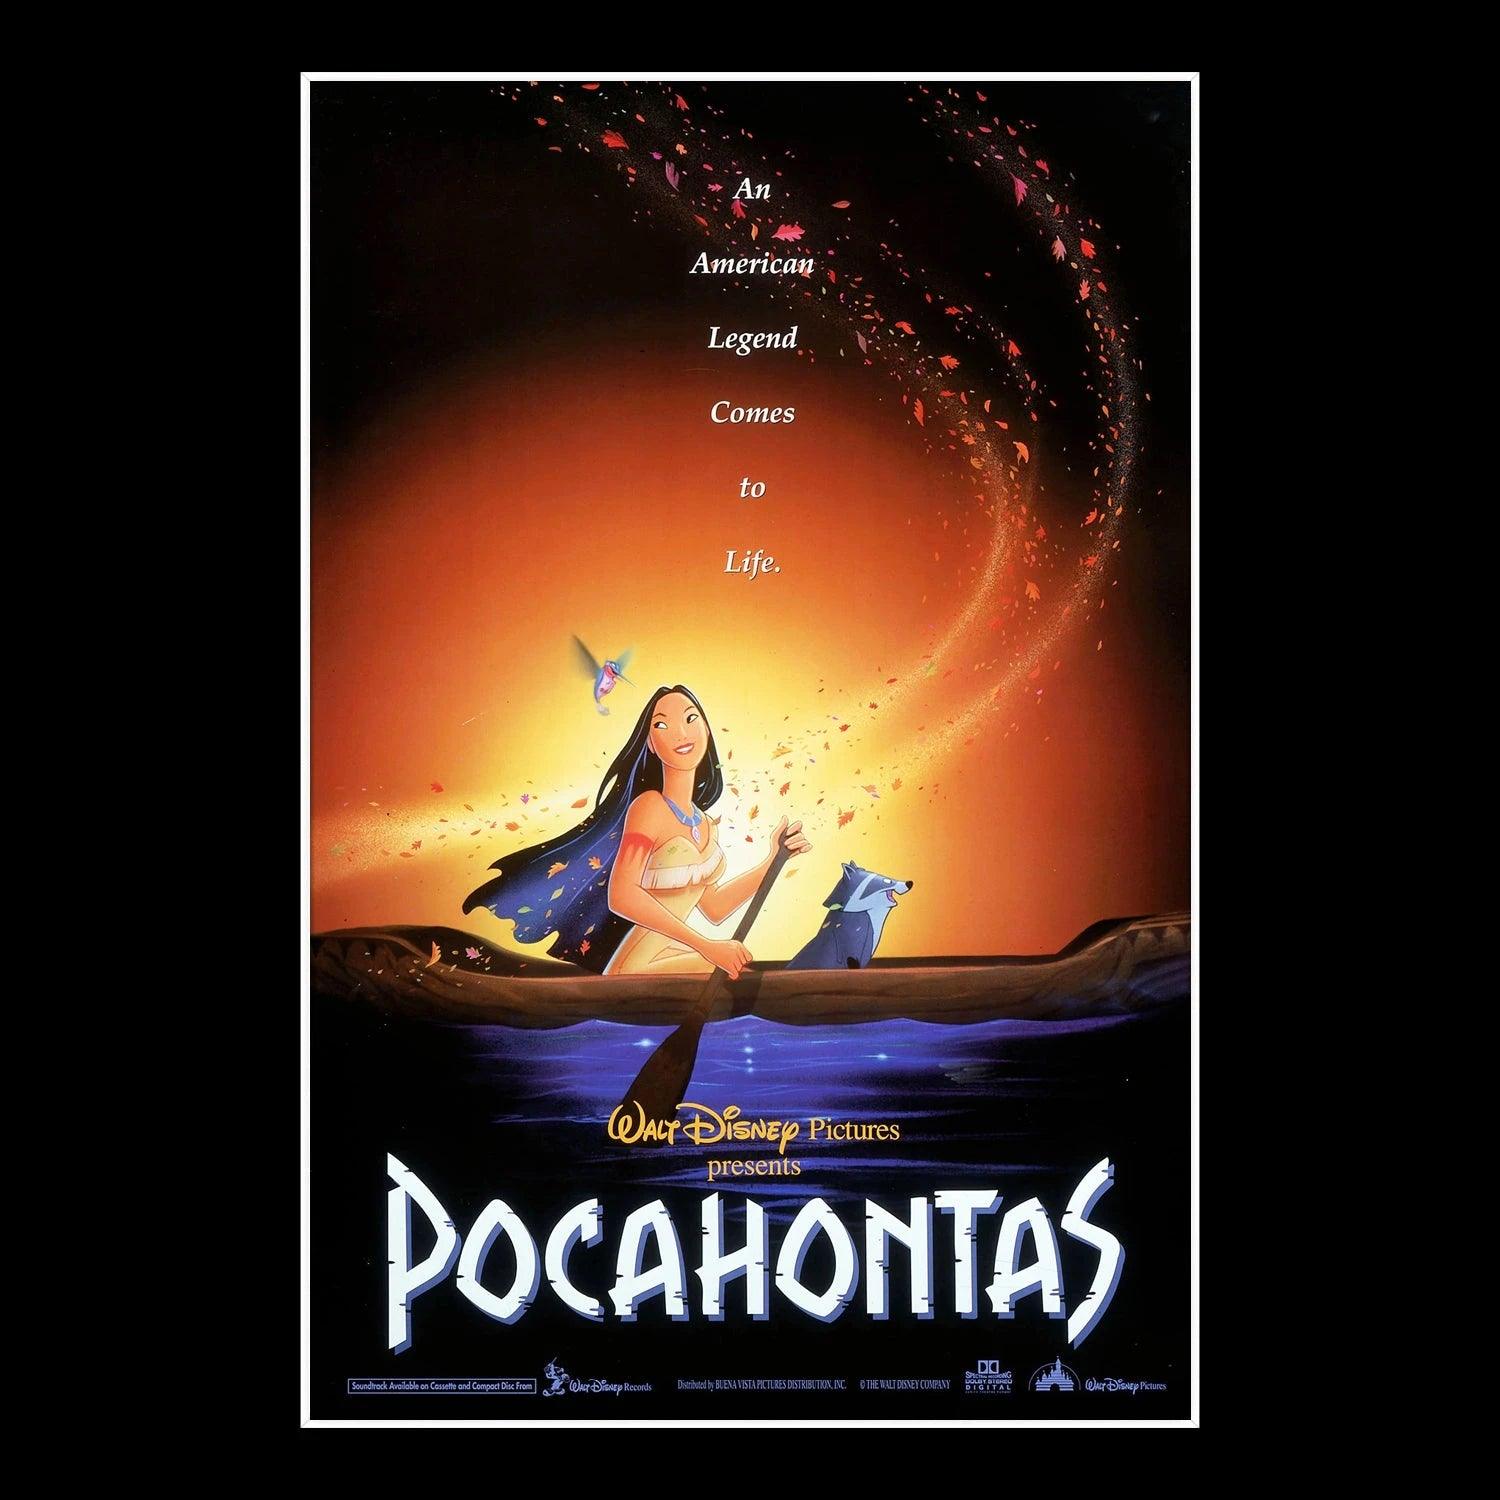 Pop! Disney - Pocahontas - #197 - Hobby Champion Inc